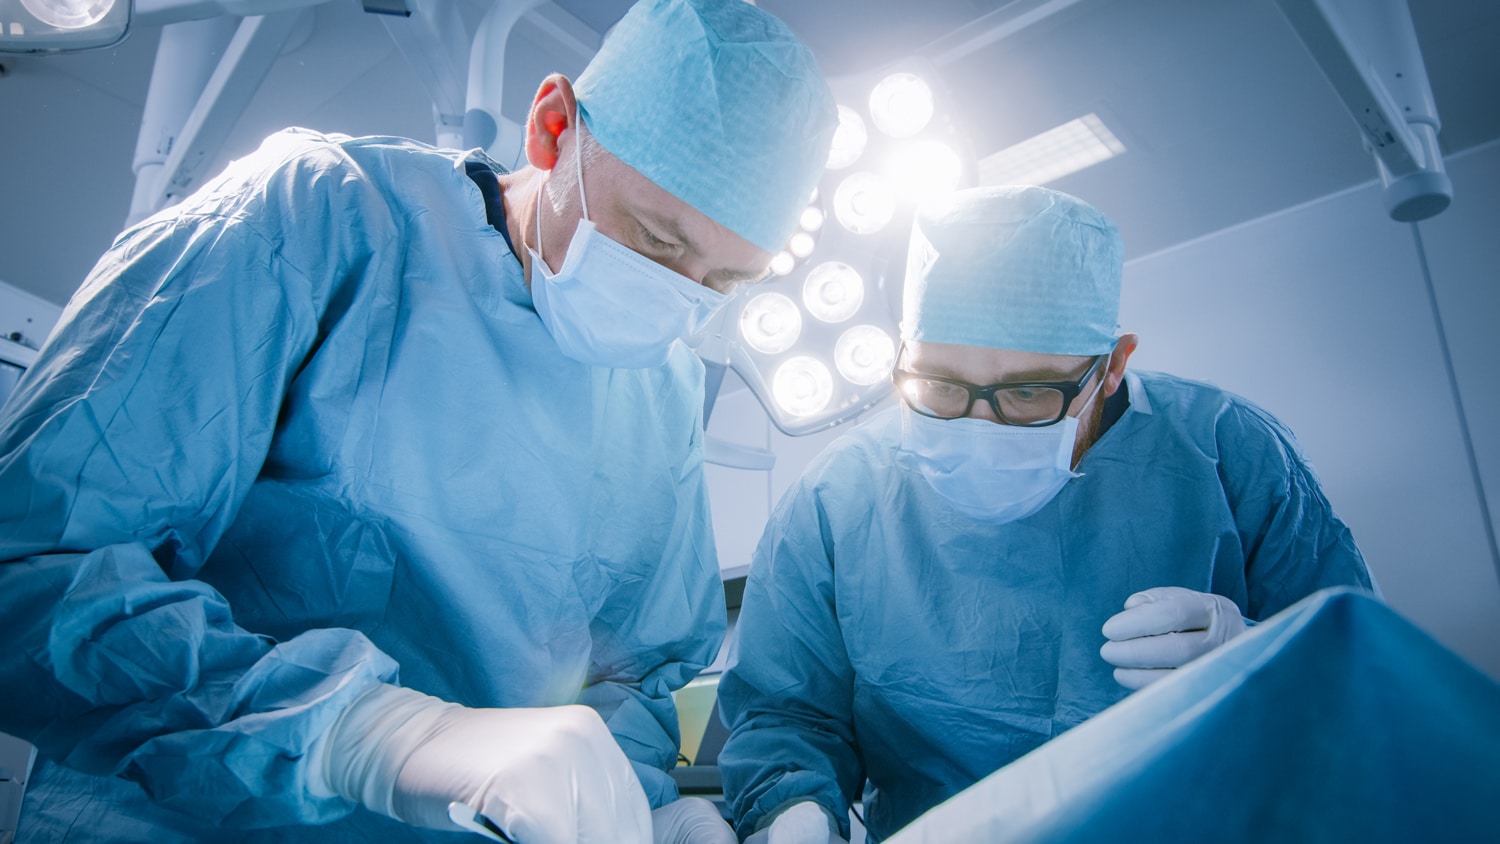 Descubren casos de trasplantes ilegales de órganos en un hospital de Bulgaria